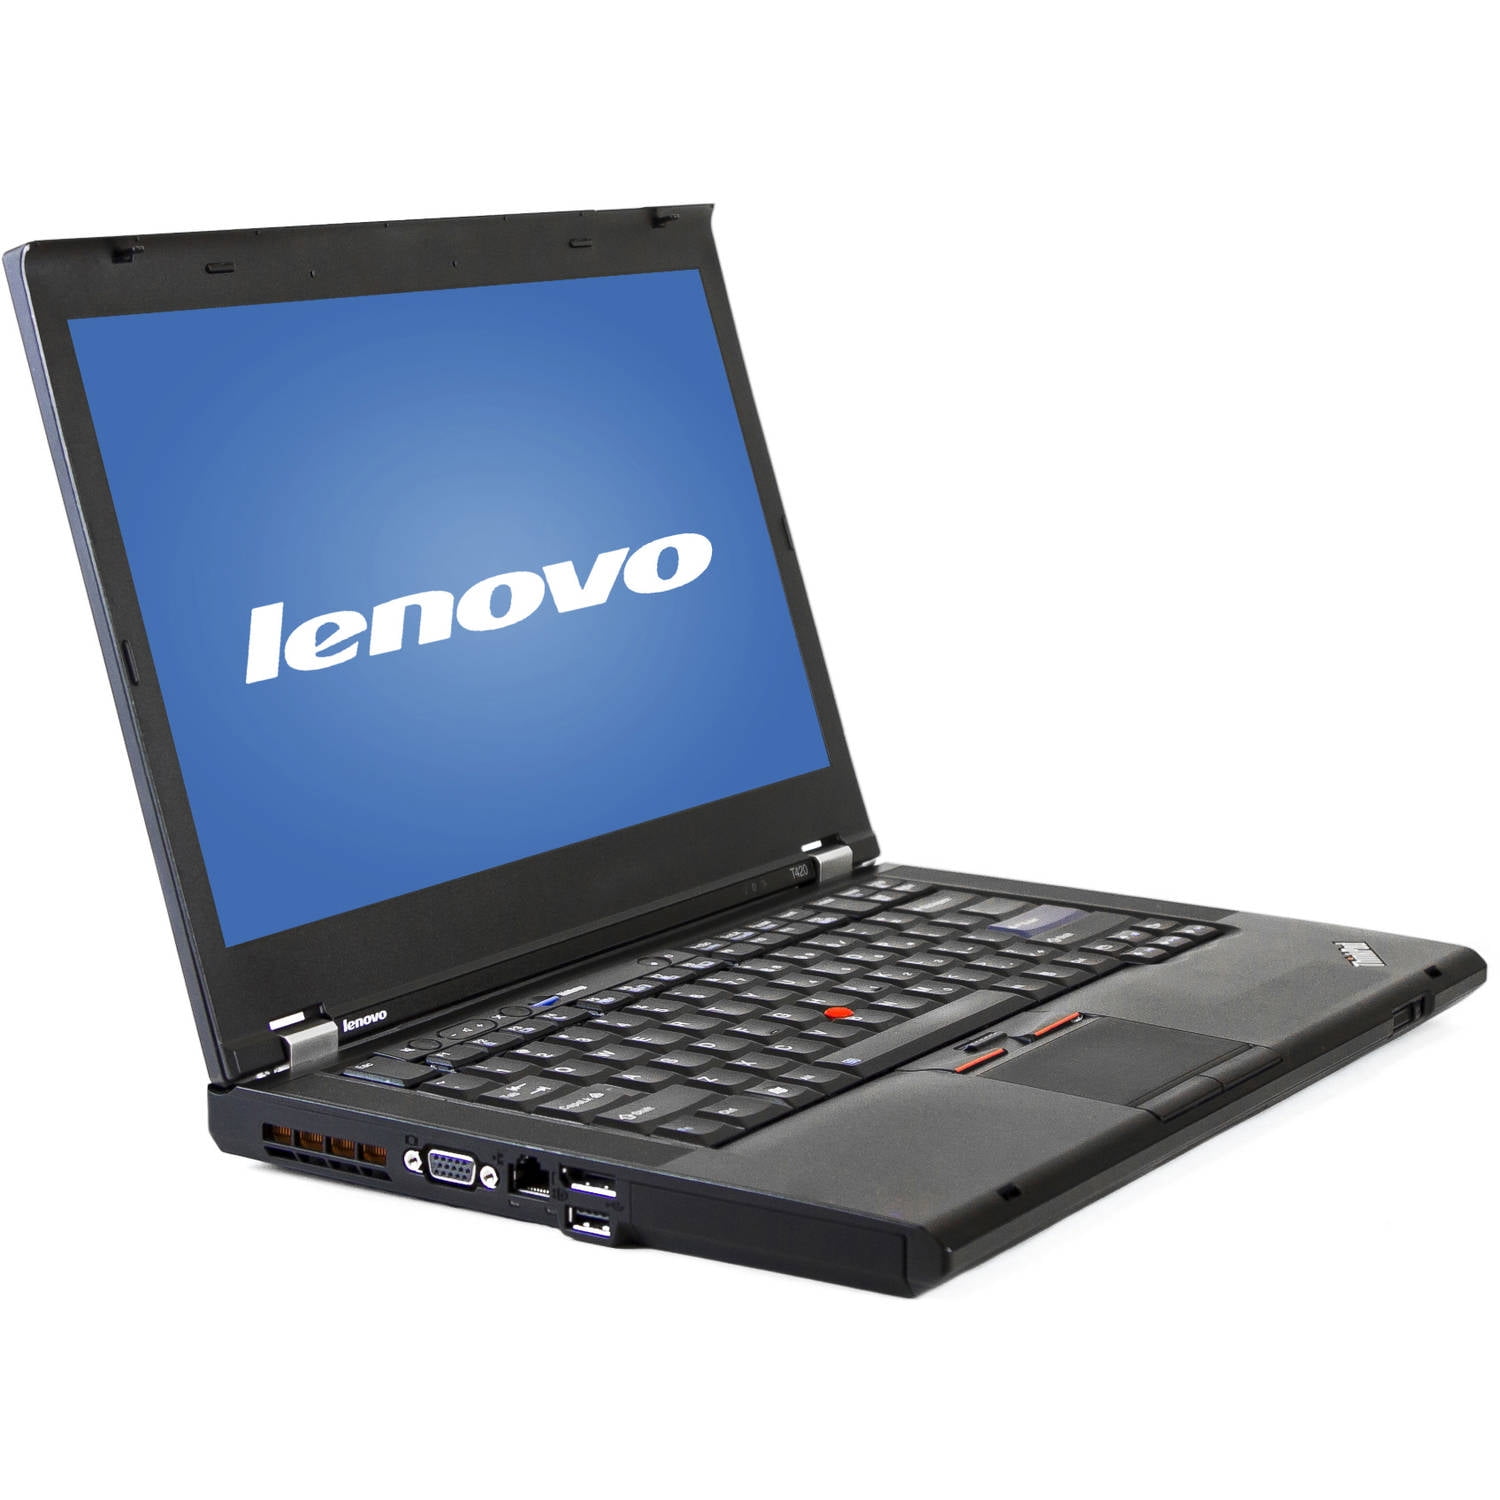 binding Præsident Manager Lenovo ThinkPad T420 14.1 Inch Laptop i5 2.50 GHz 8GB 128 GB HDD Windows 10  Pro (Used) - Walmart.com